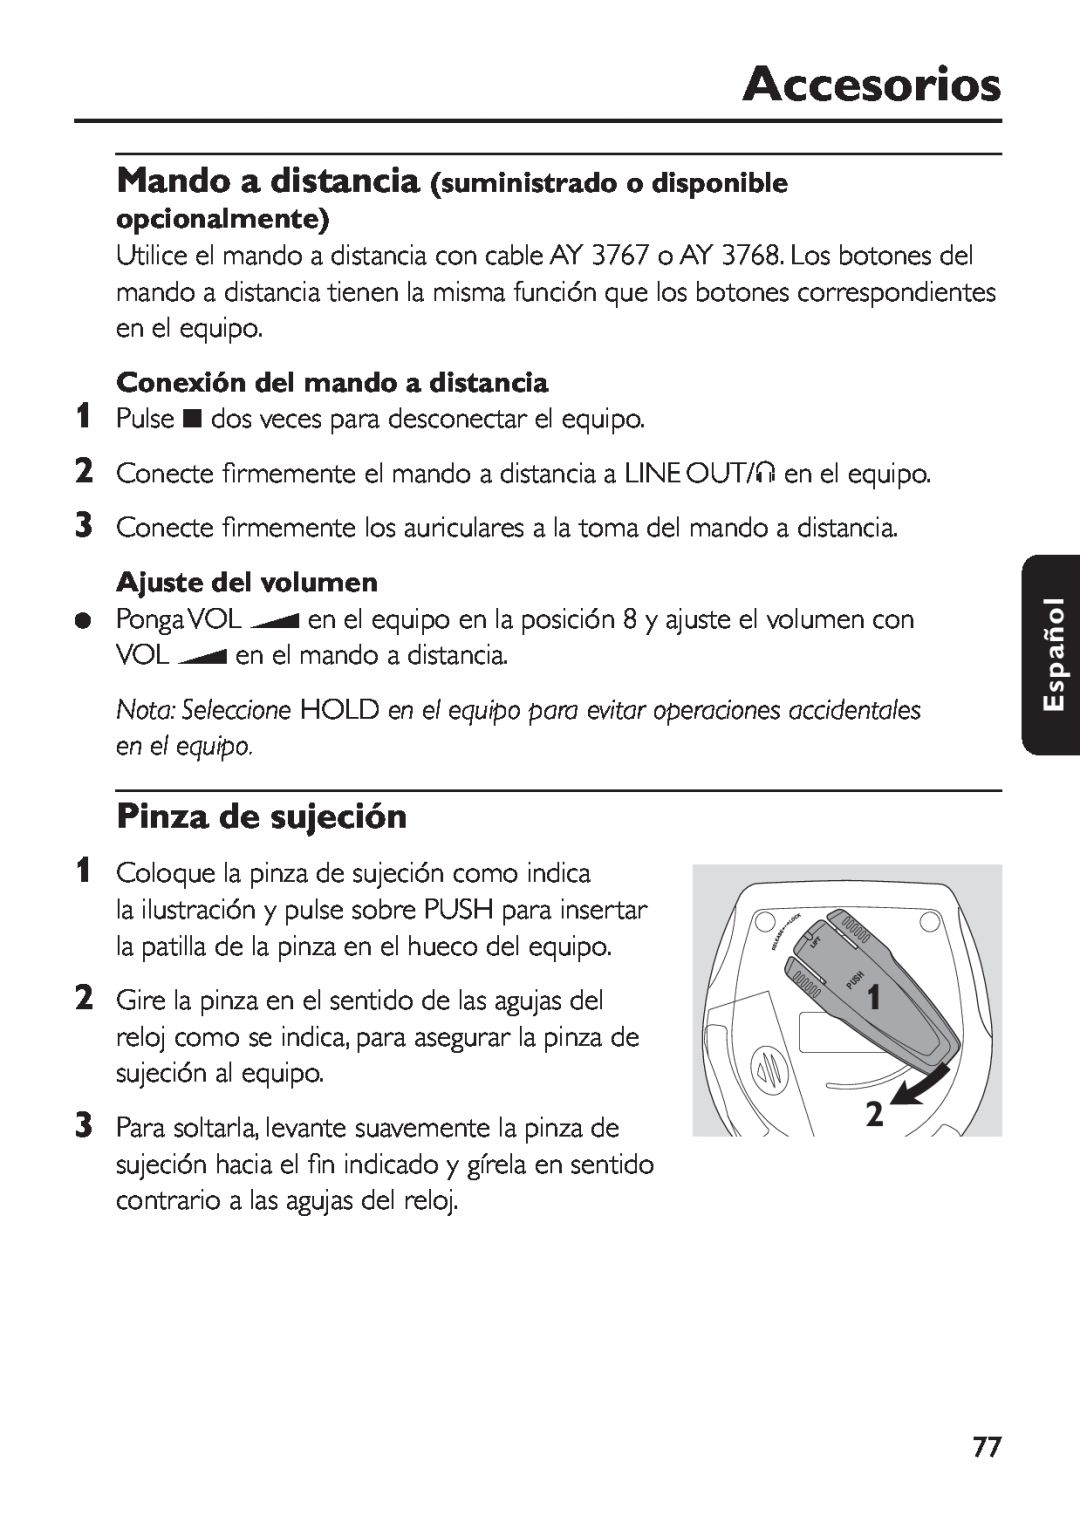 Philips EXP 501/00 manual Pinza de sujeción, Mando a distancia suministrado o disponible opcionalmente, Accesorios, Español 